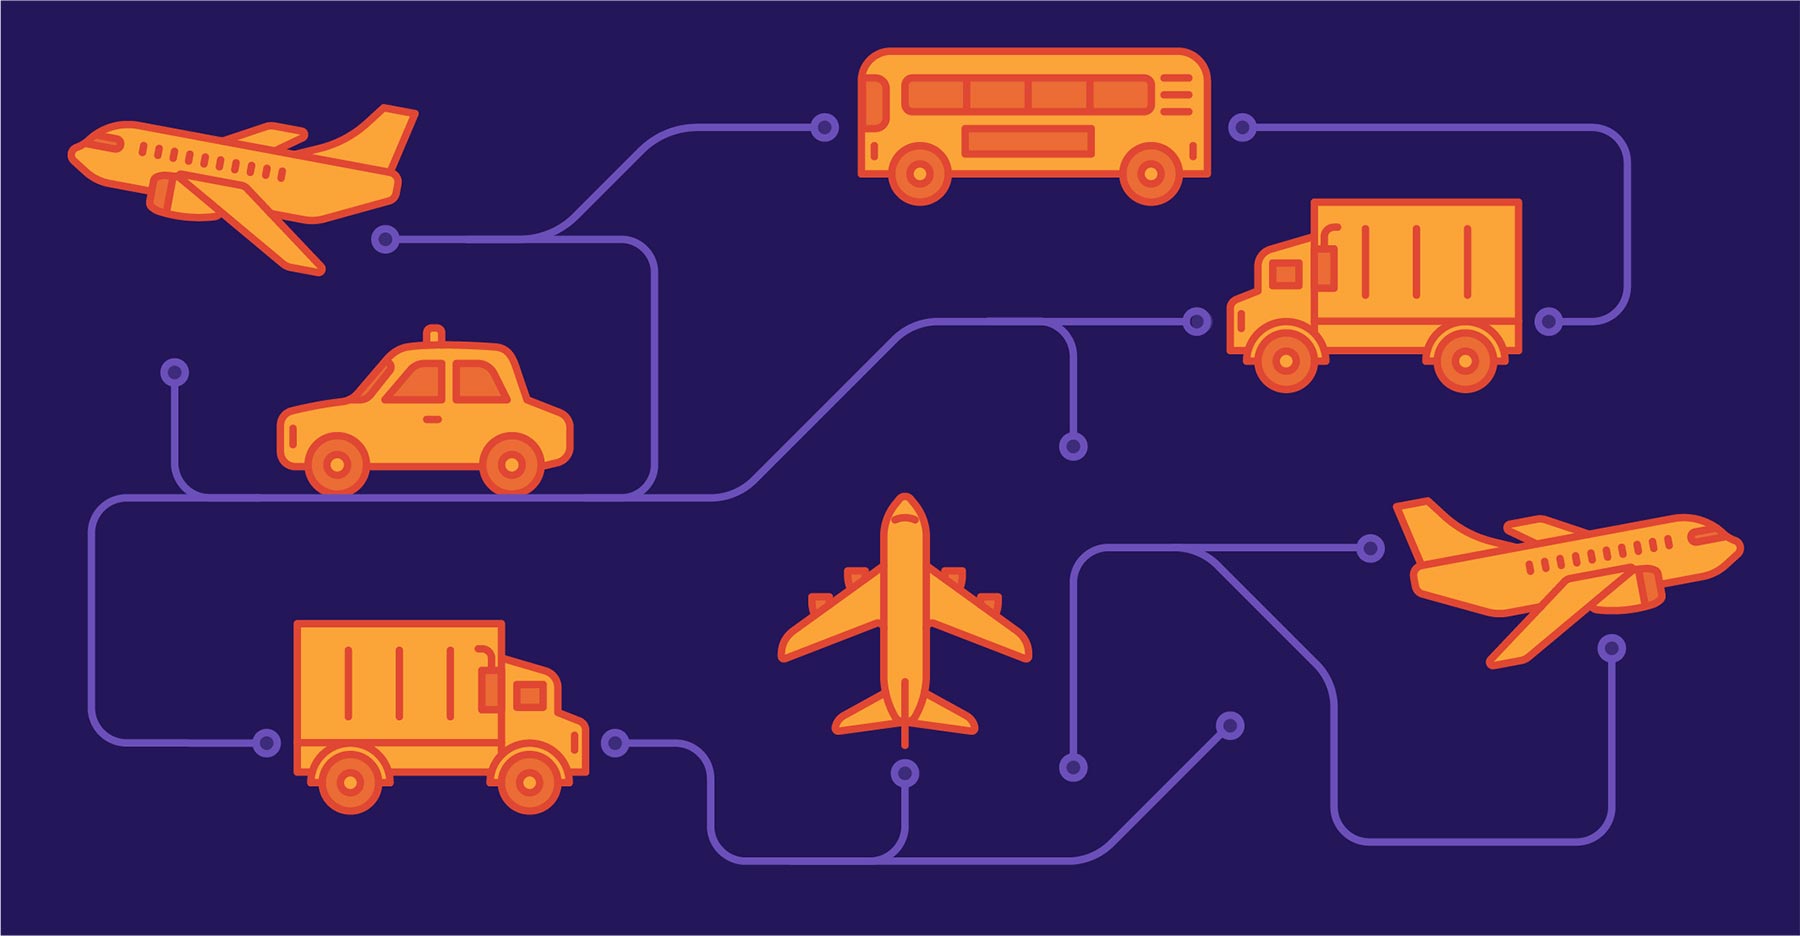 GitLab transport illustration